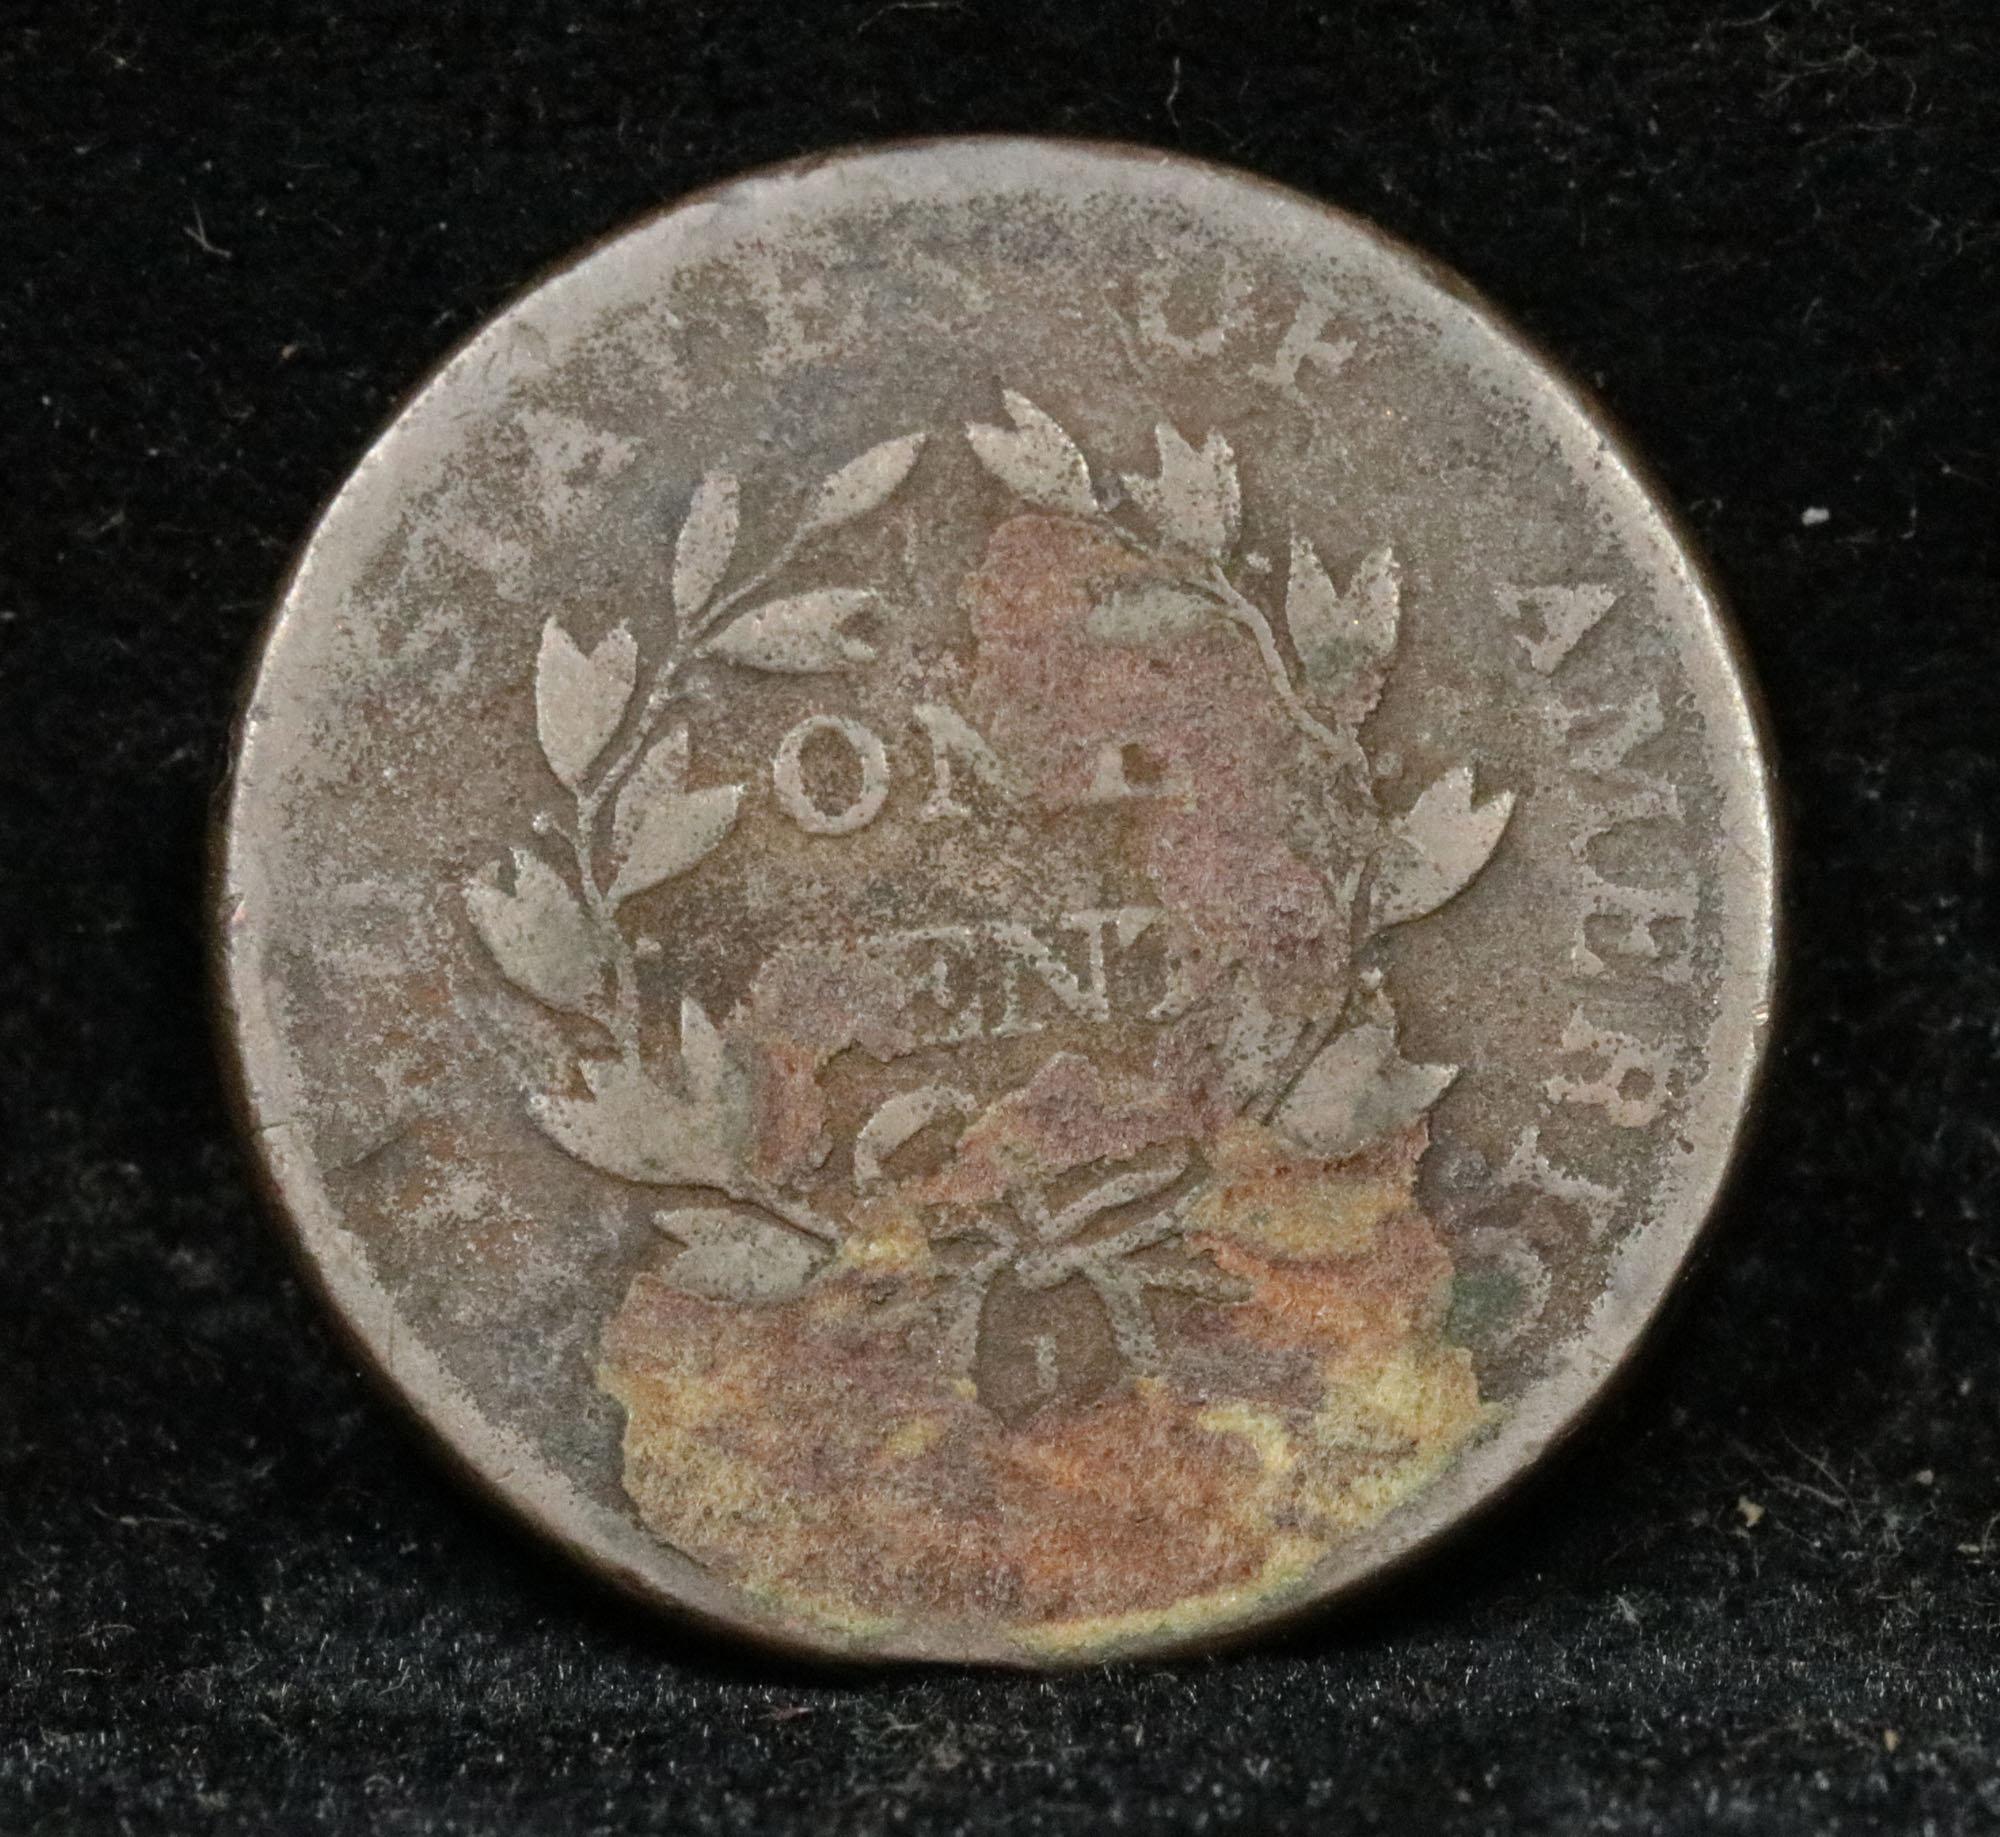 1805 Draped Bust Large Cent 1c Grades vg, very good